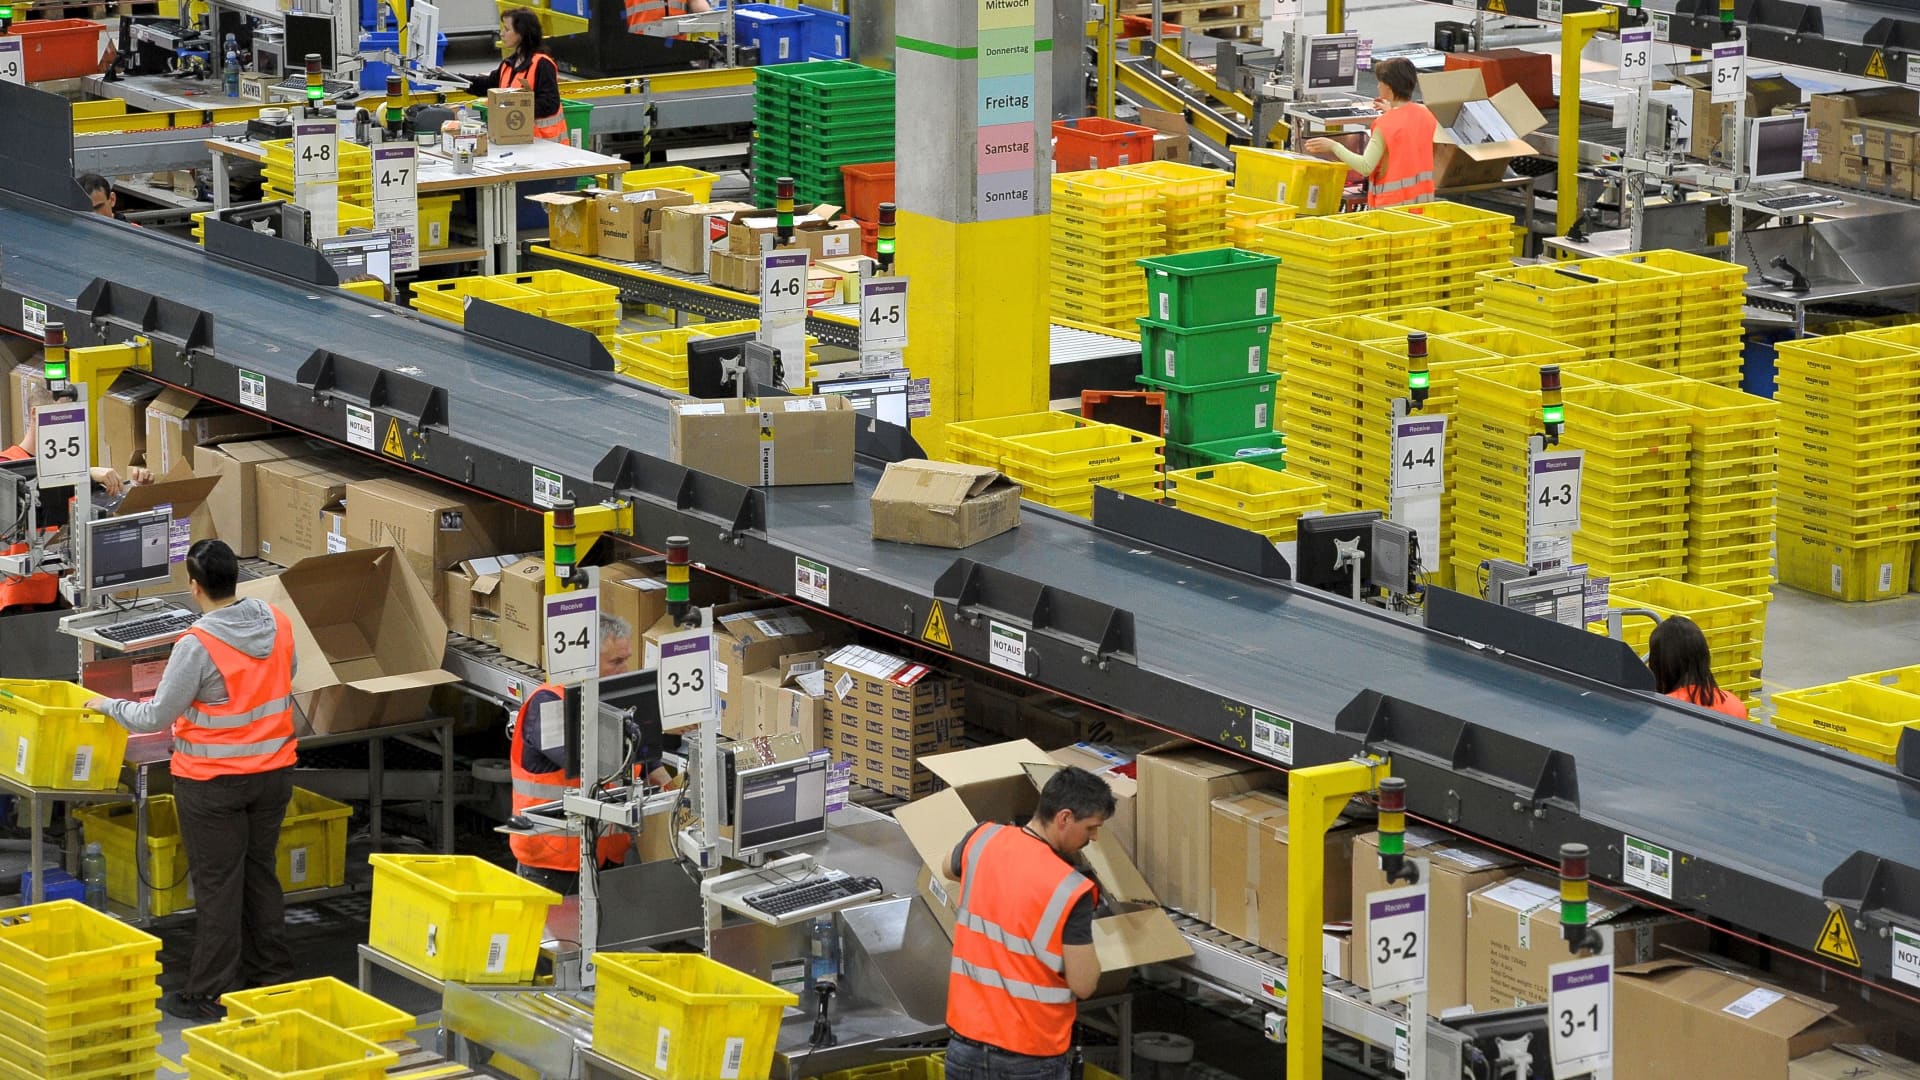 Amazon faces Senate probe over warehouse safety